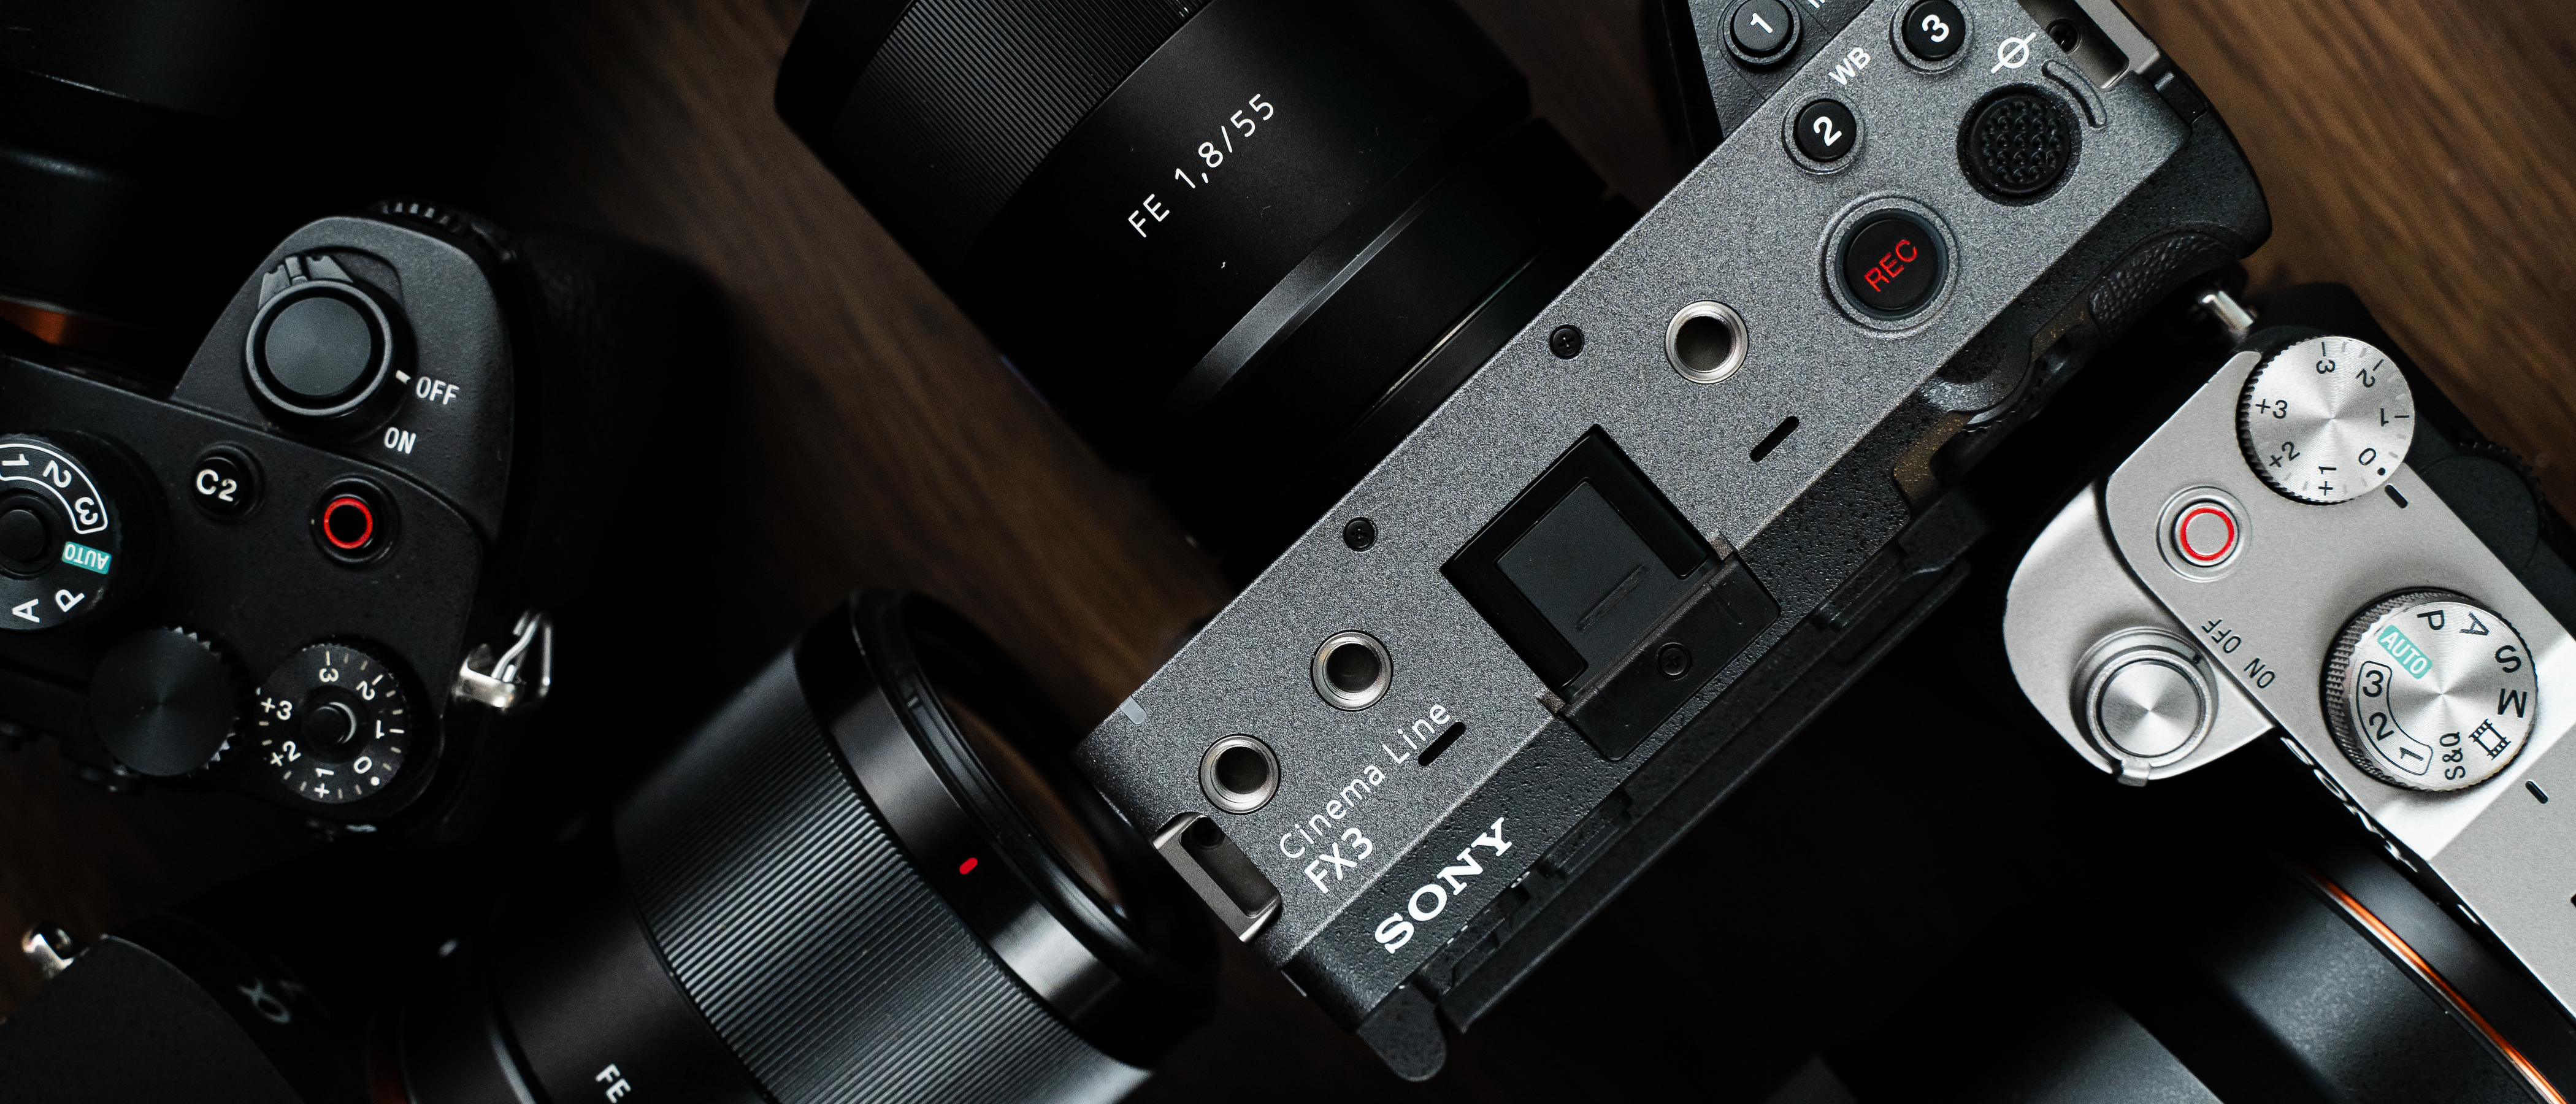 Sony Camera Technology Closeup 4200x1800